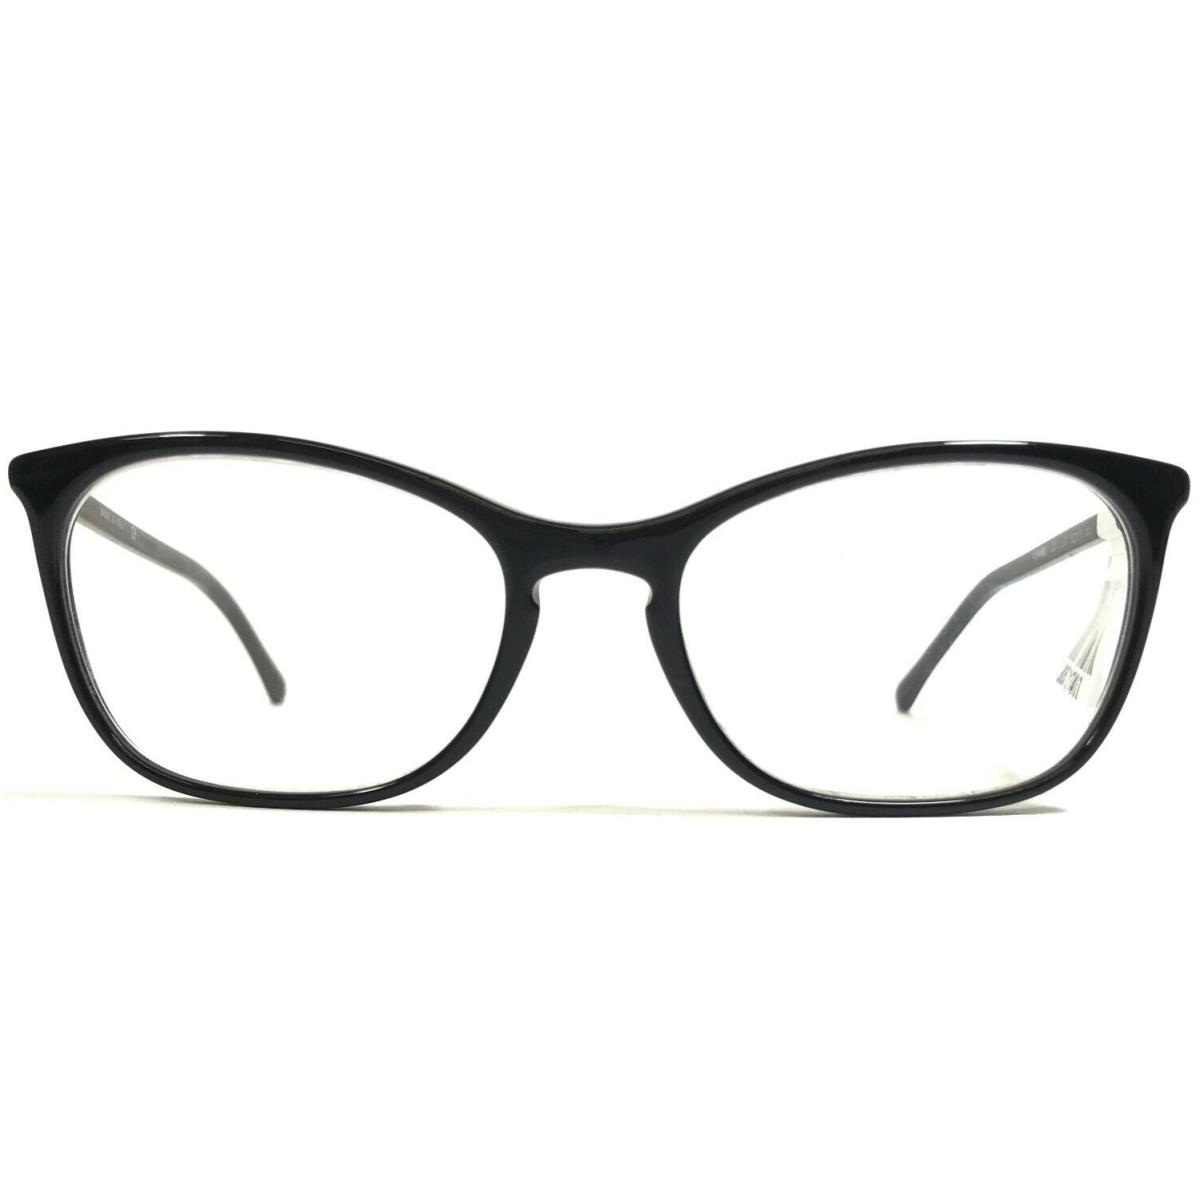 Chanel Eyeglasses Frames 3281 c.501 Polished Black Cat Eye Thin Rim 52-17-140